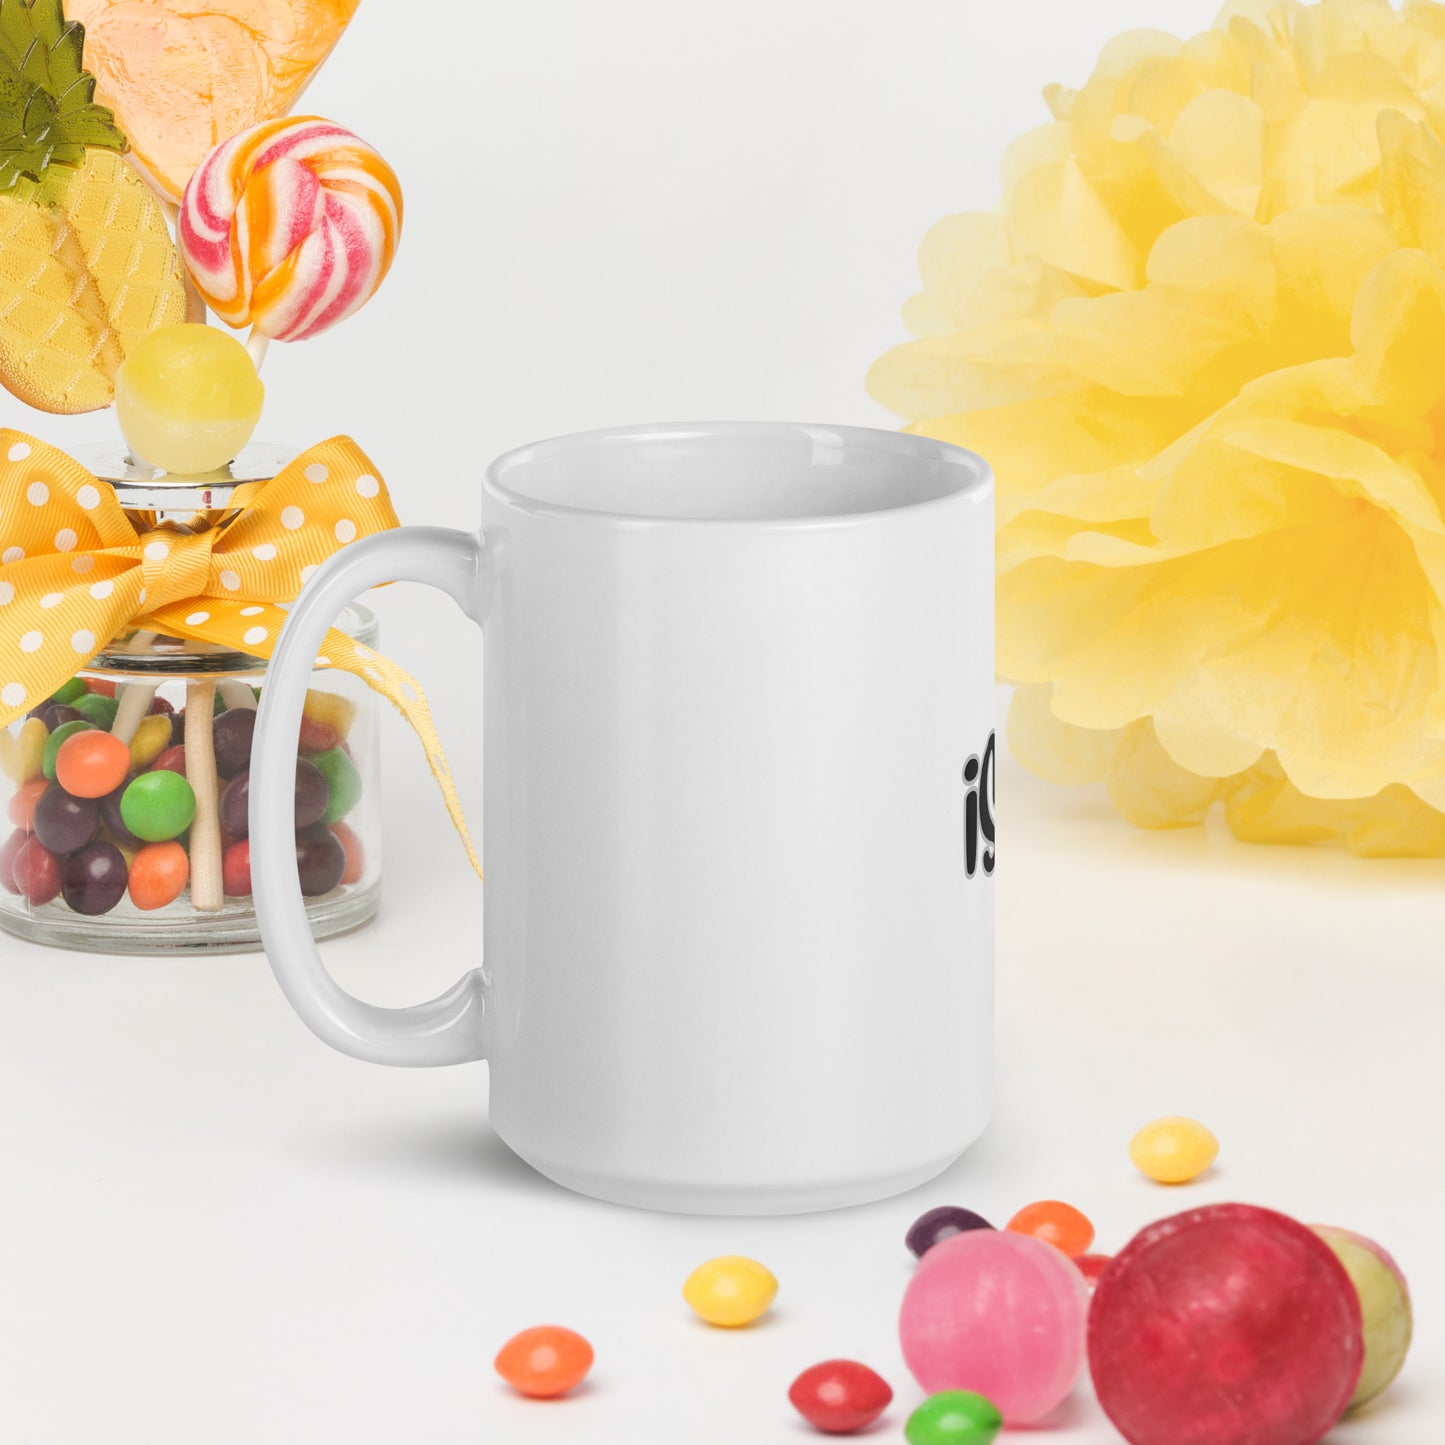 ISFP White glossy mug